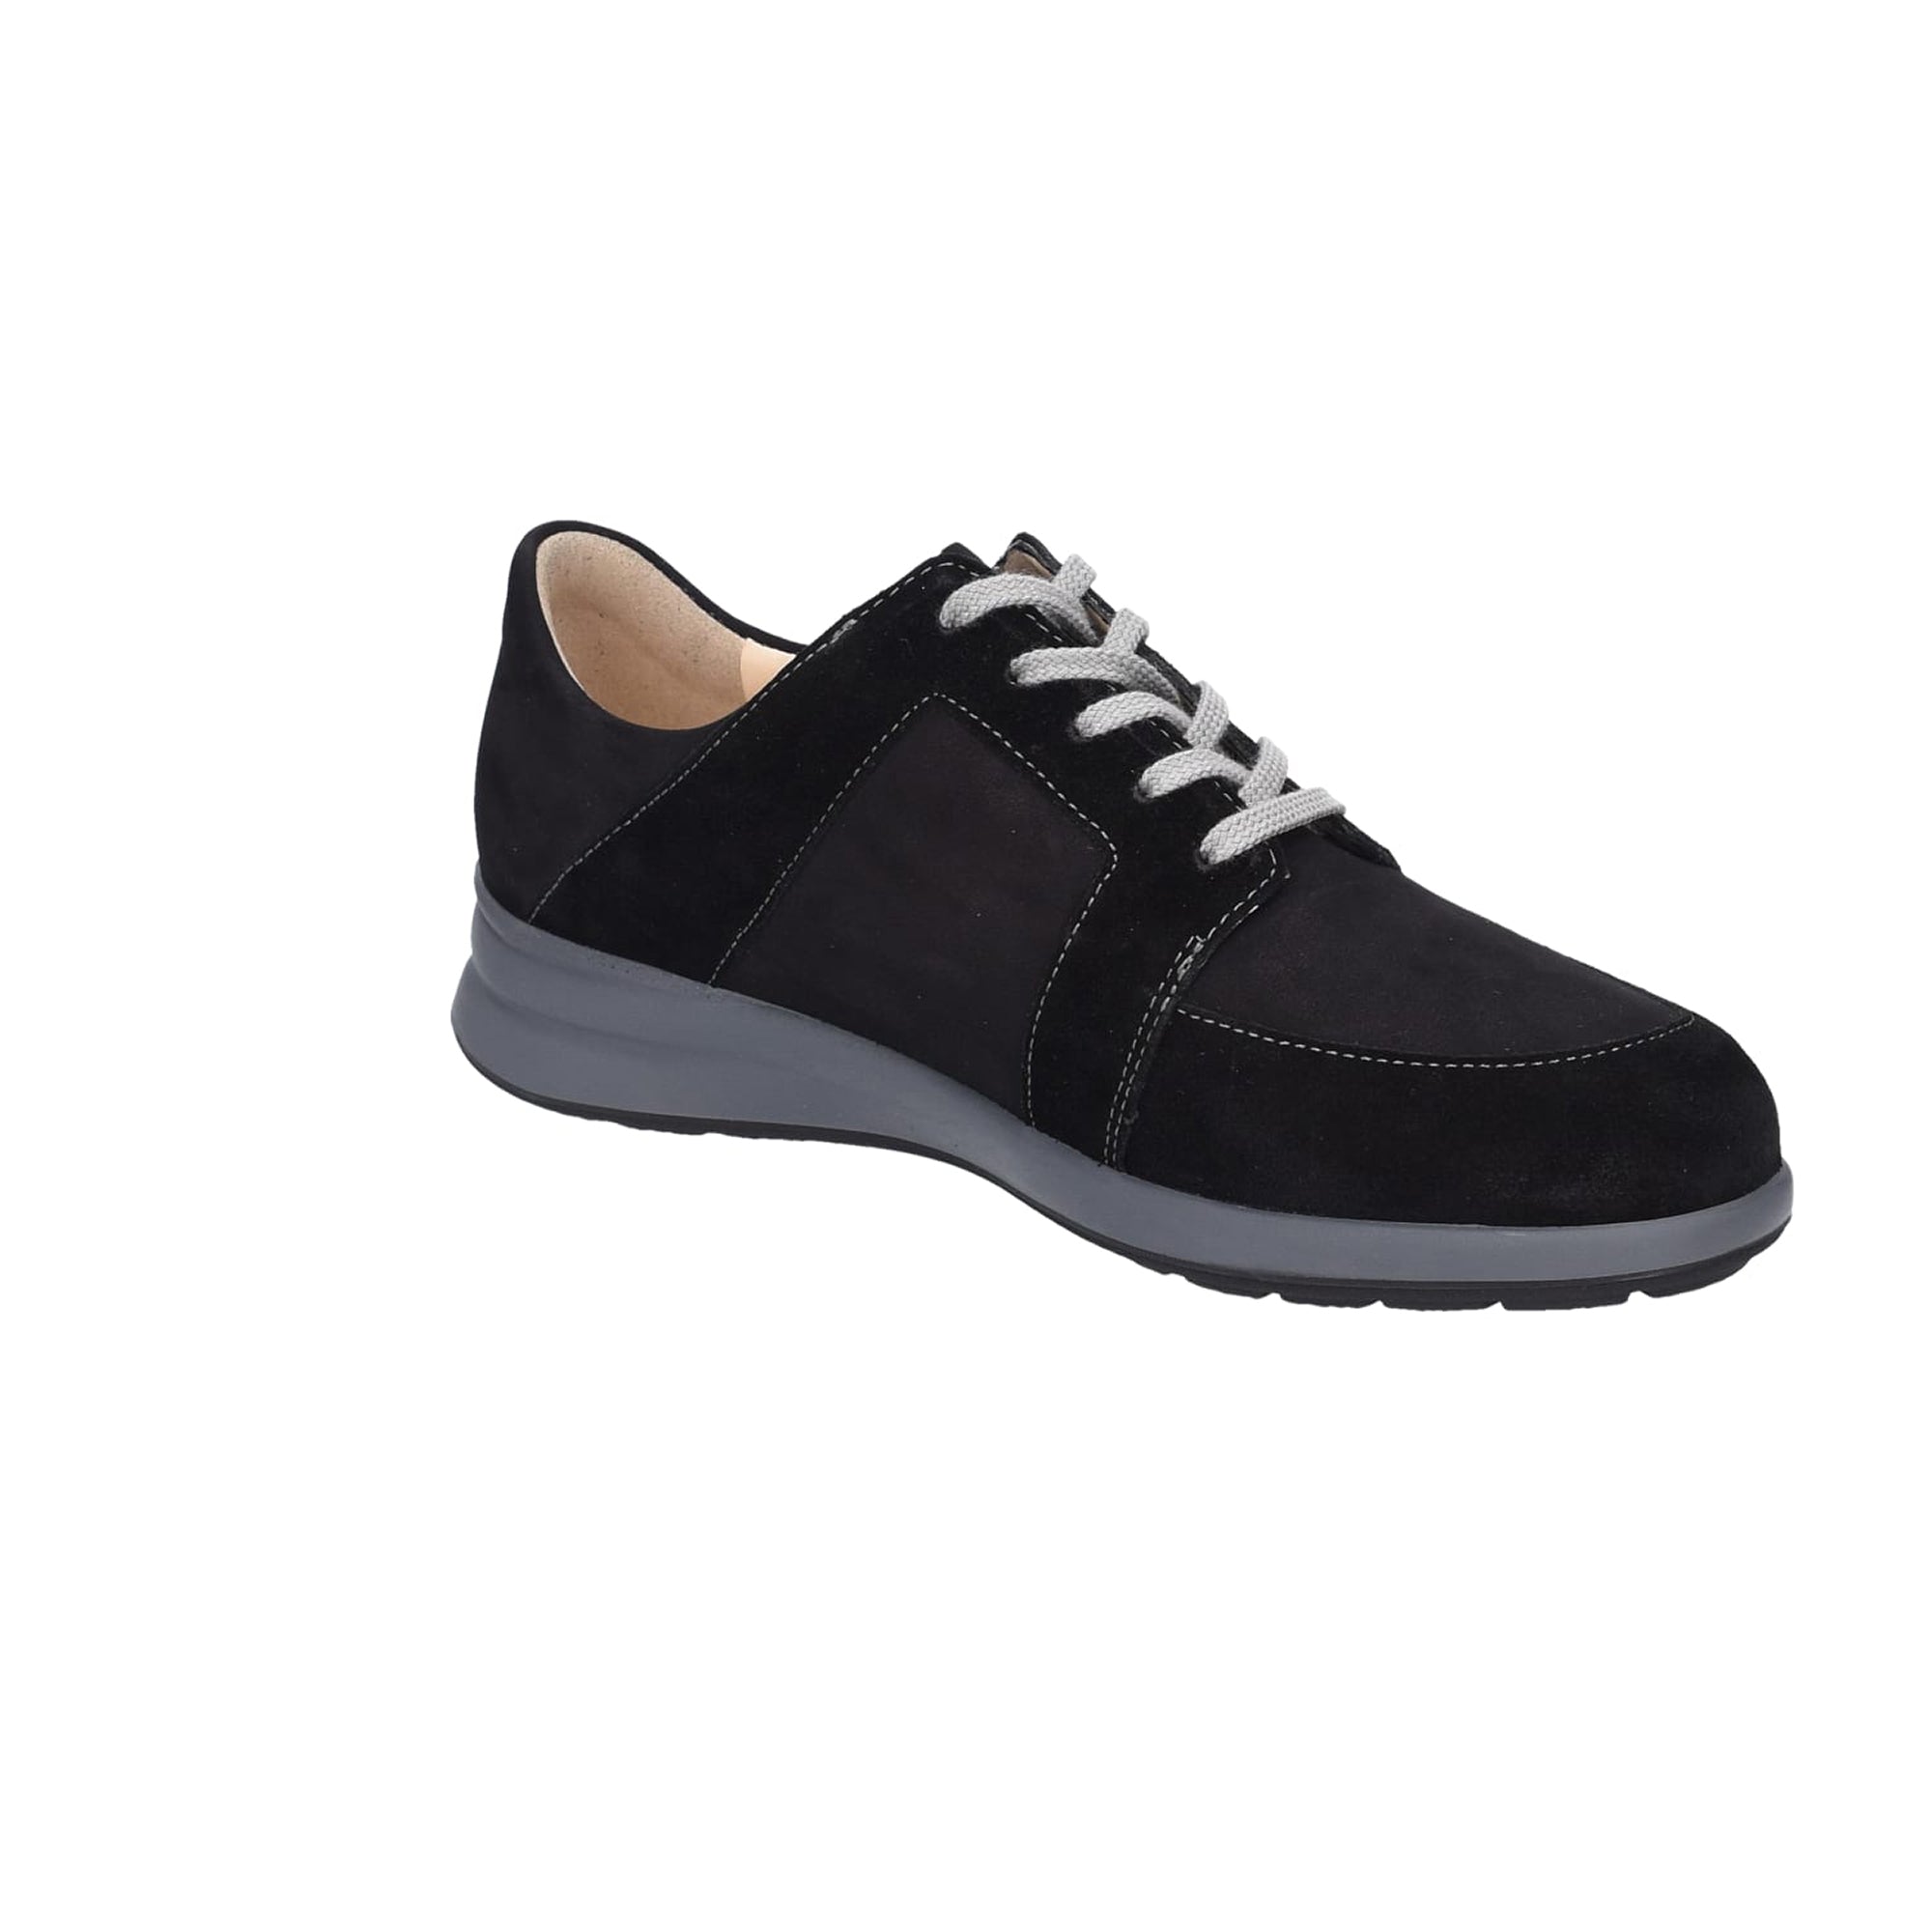 Finn Comfort Fasano Women's Comfortable Black Shoes - Stylish & Durable